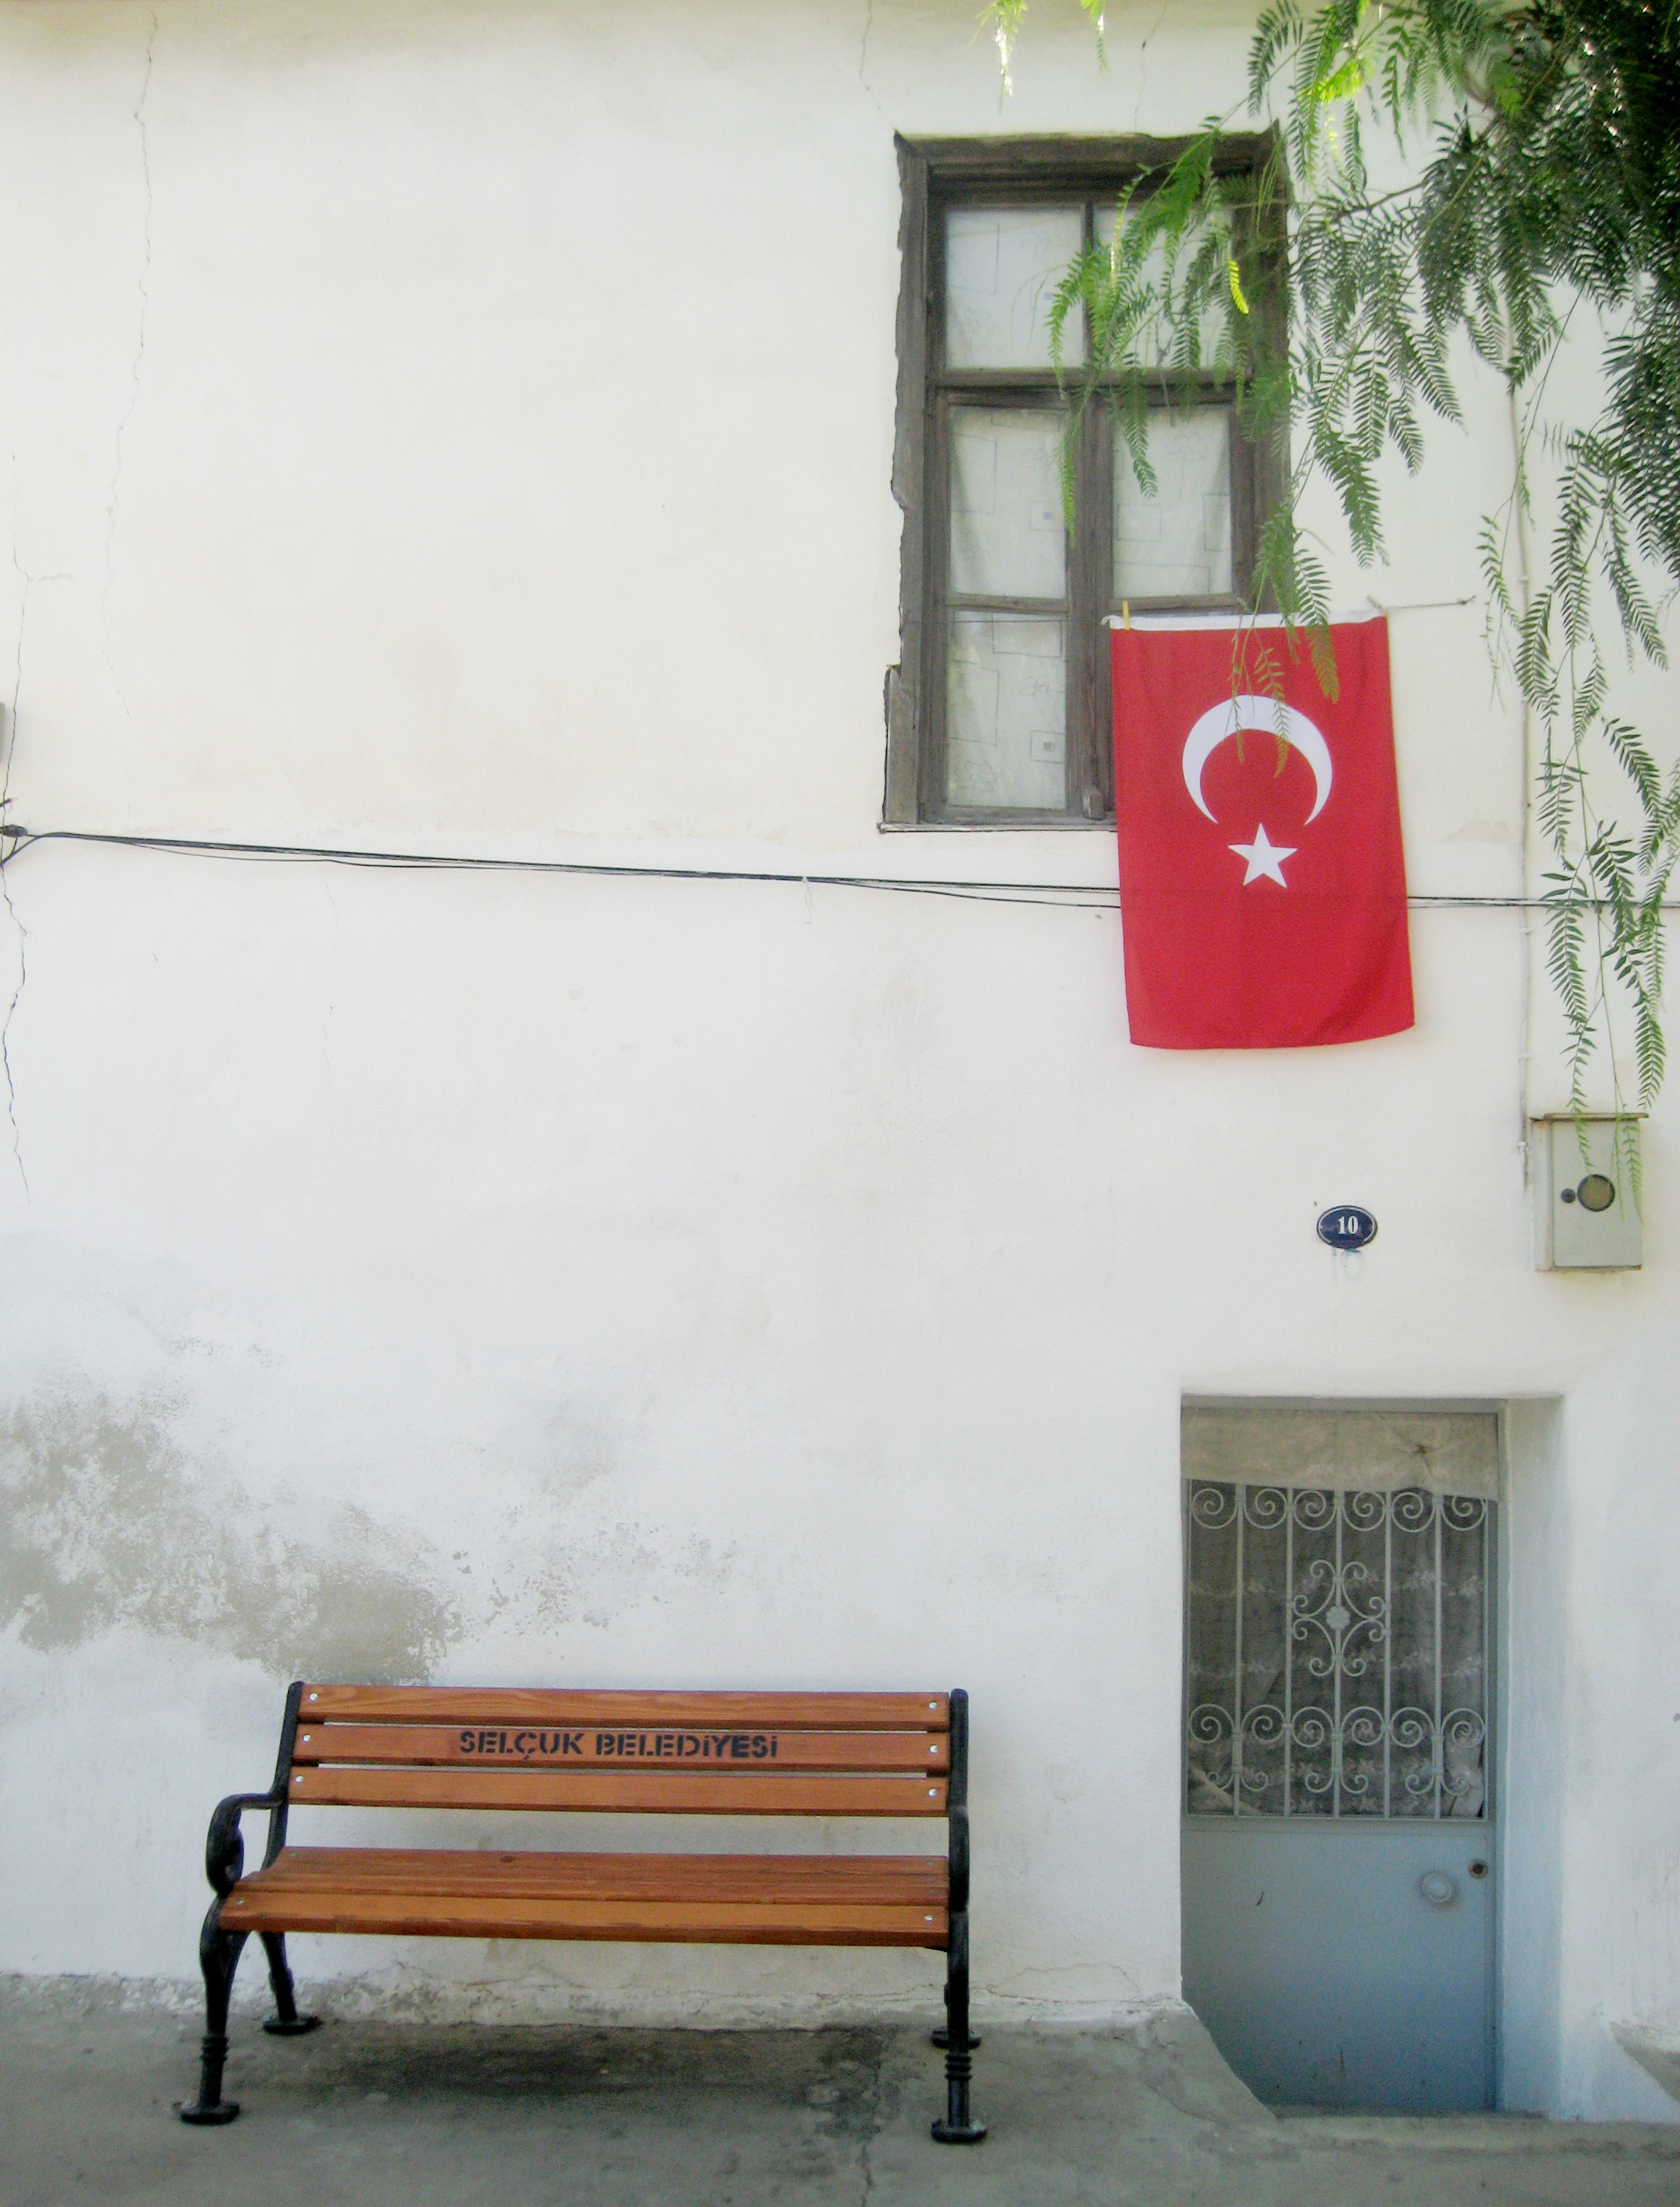 Selçuk, Turkey